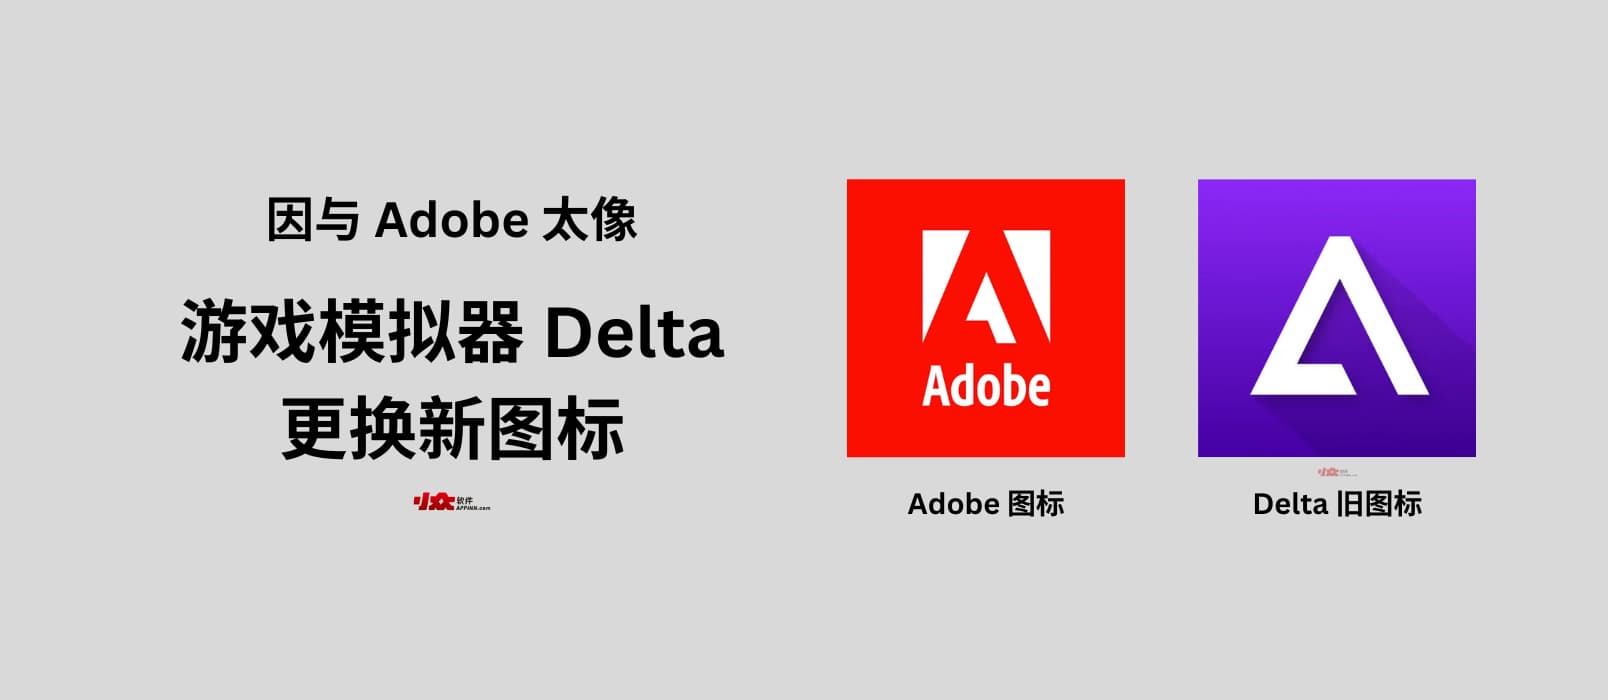 Adobe 威胁起诉游戏模拟器 Delta 图标太像，于是 Delta 换了新图标